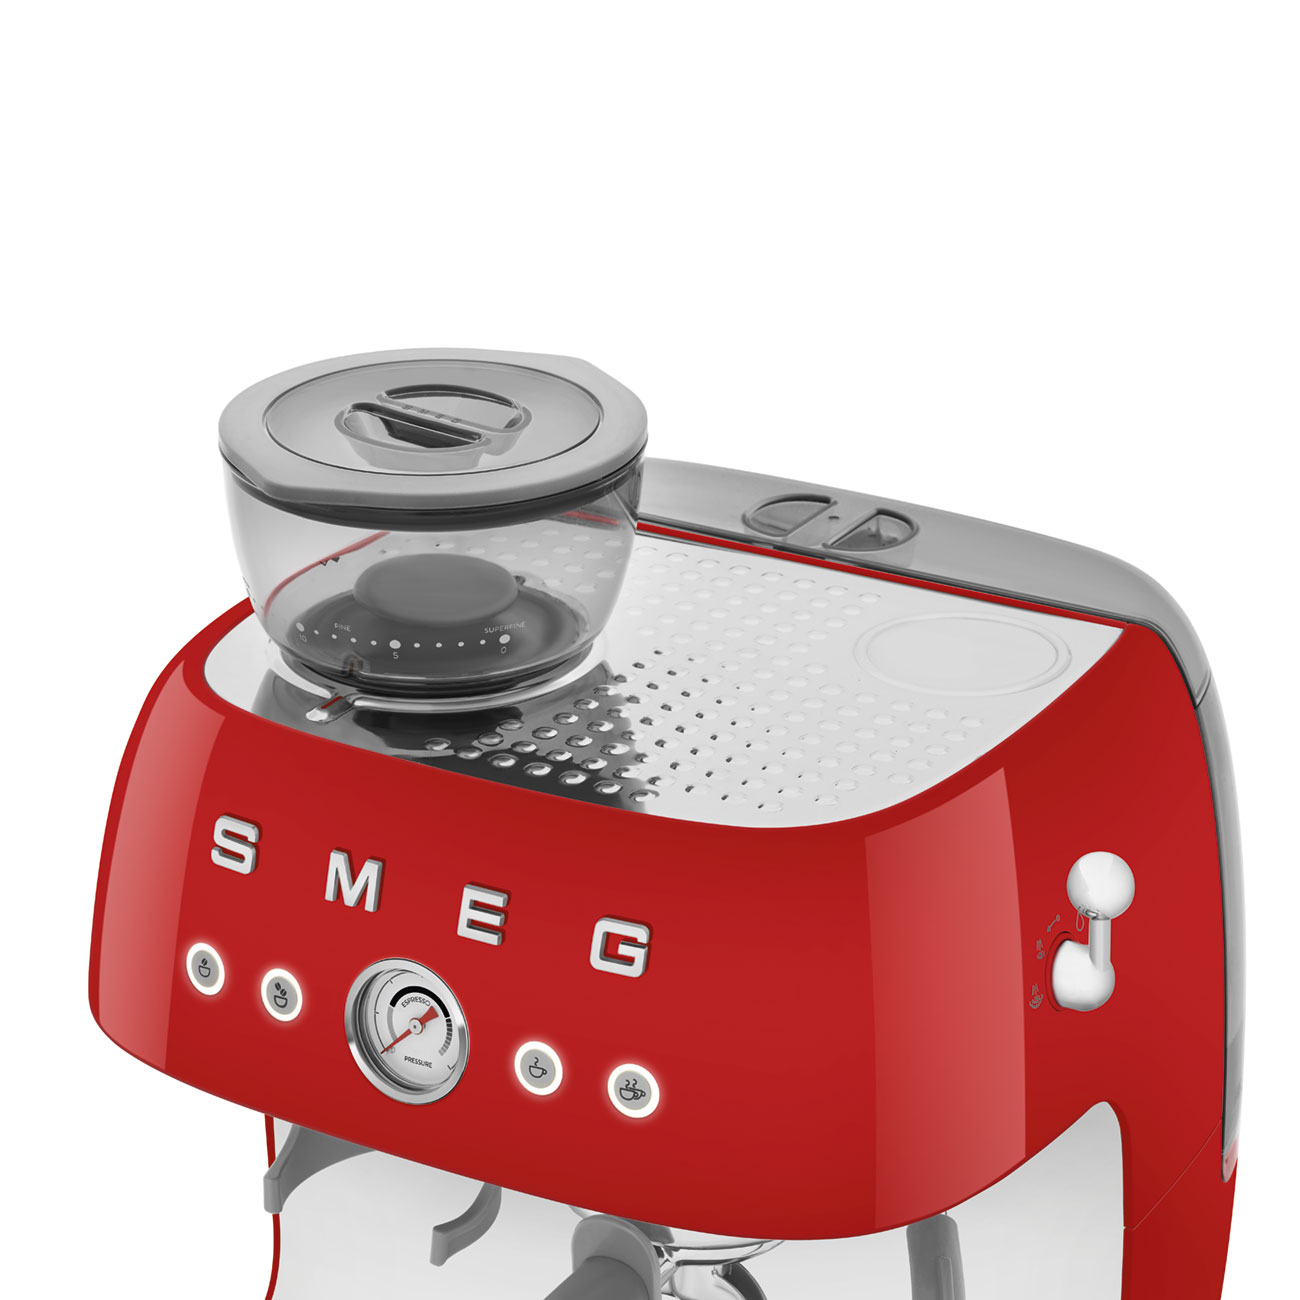 Smeg Red Espresso Manual Coffee Machine with Grinder_7